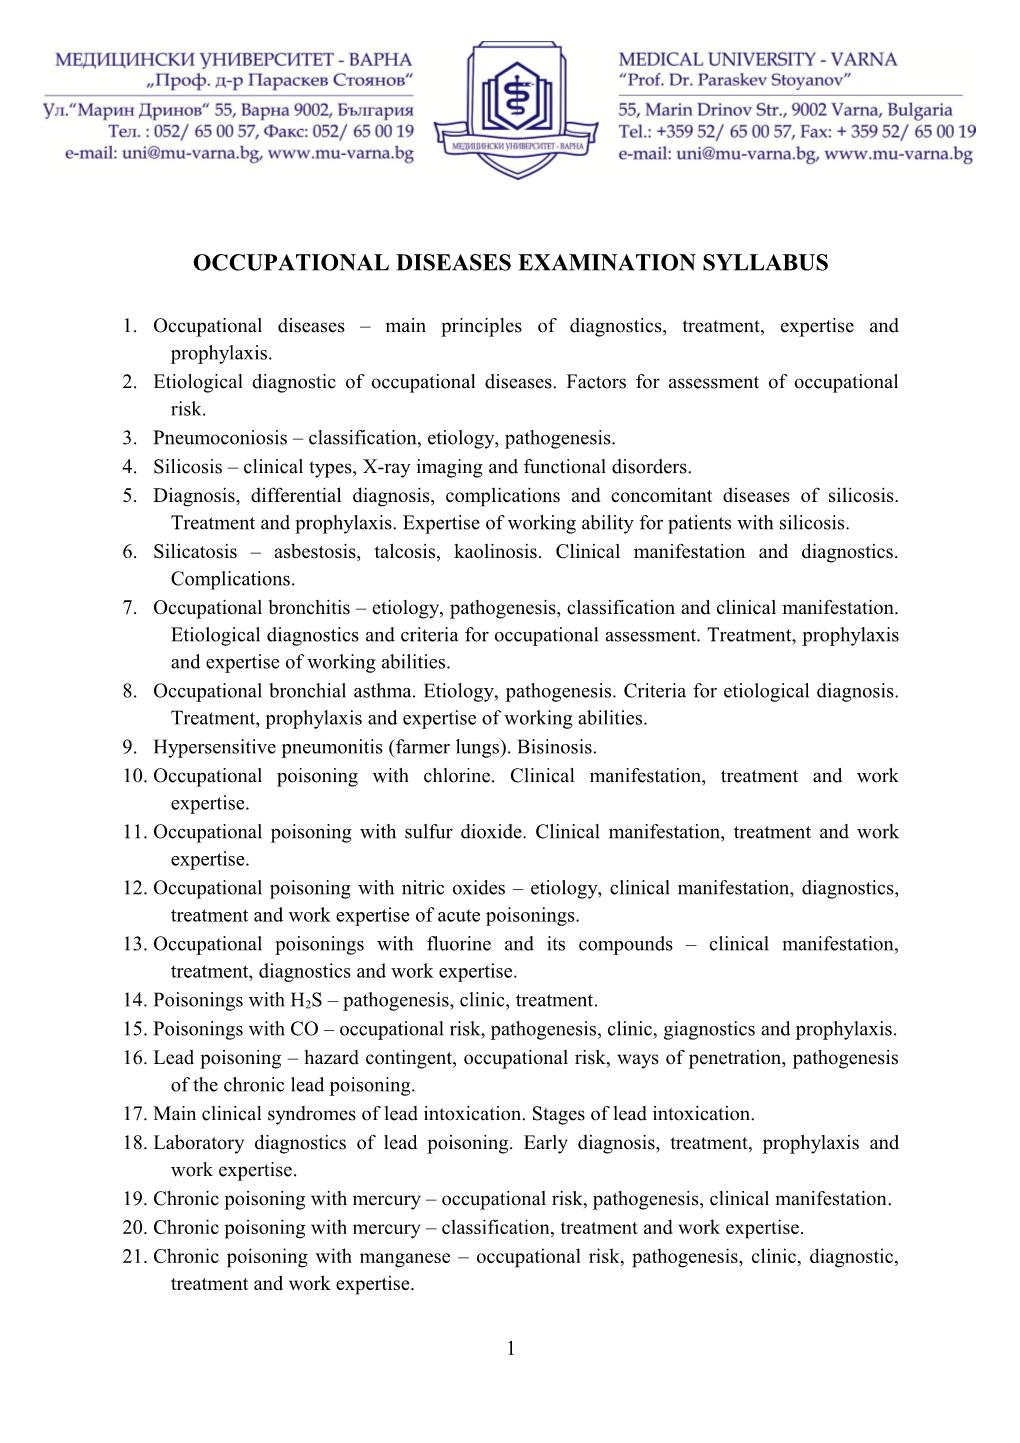 Occupational Diseases Examination Syllabus